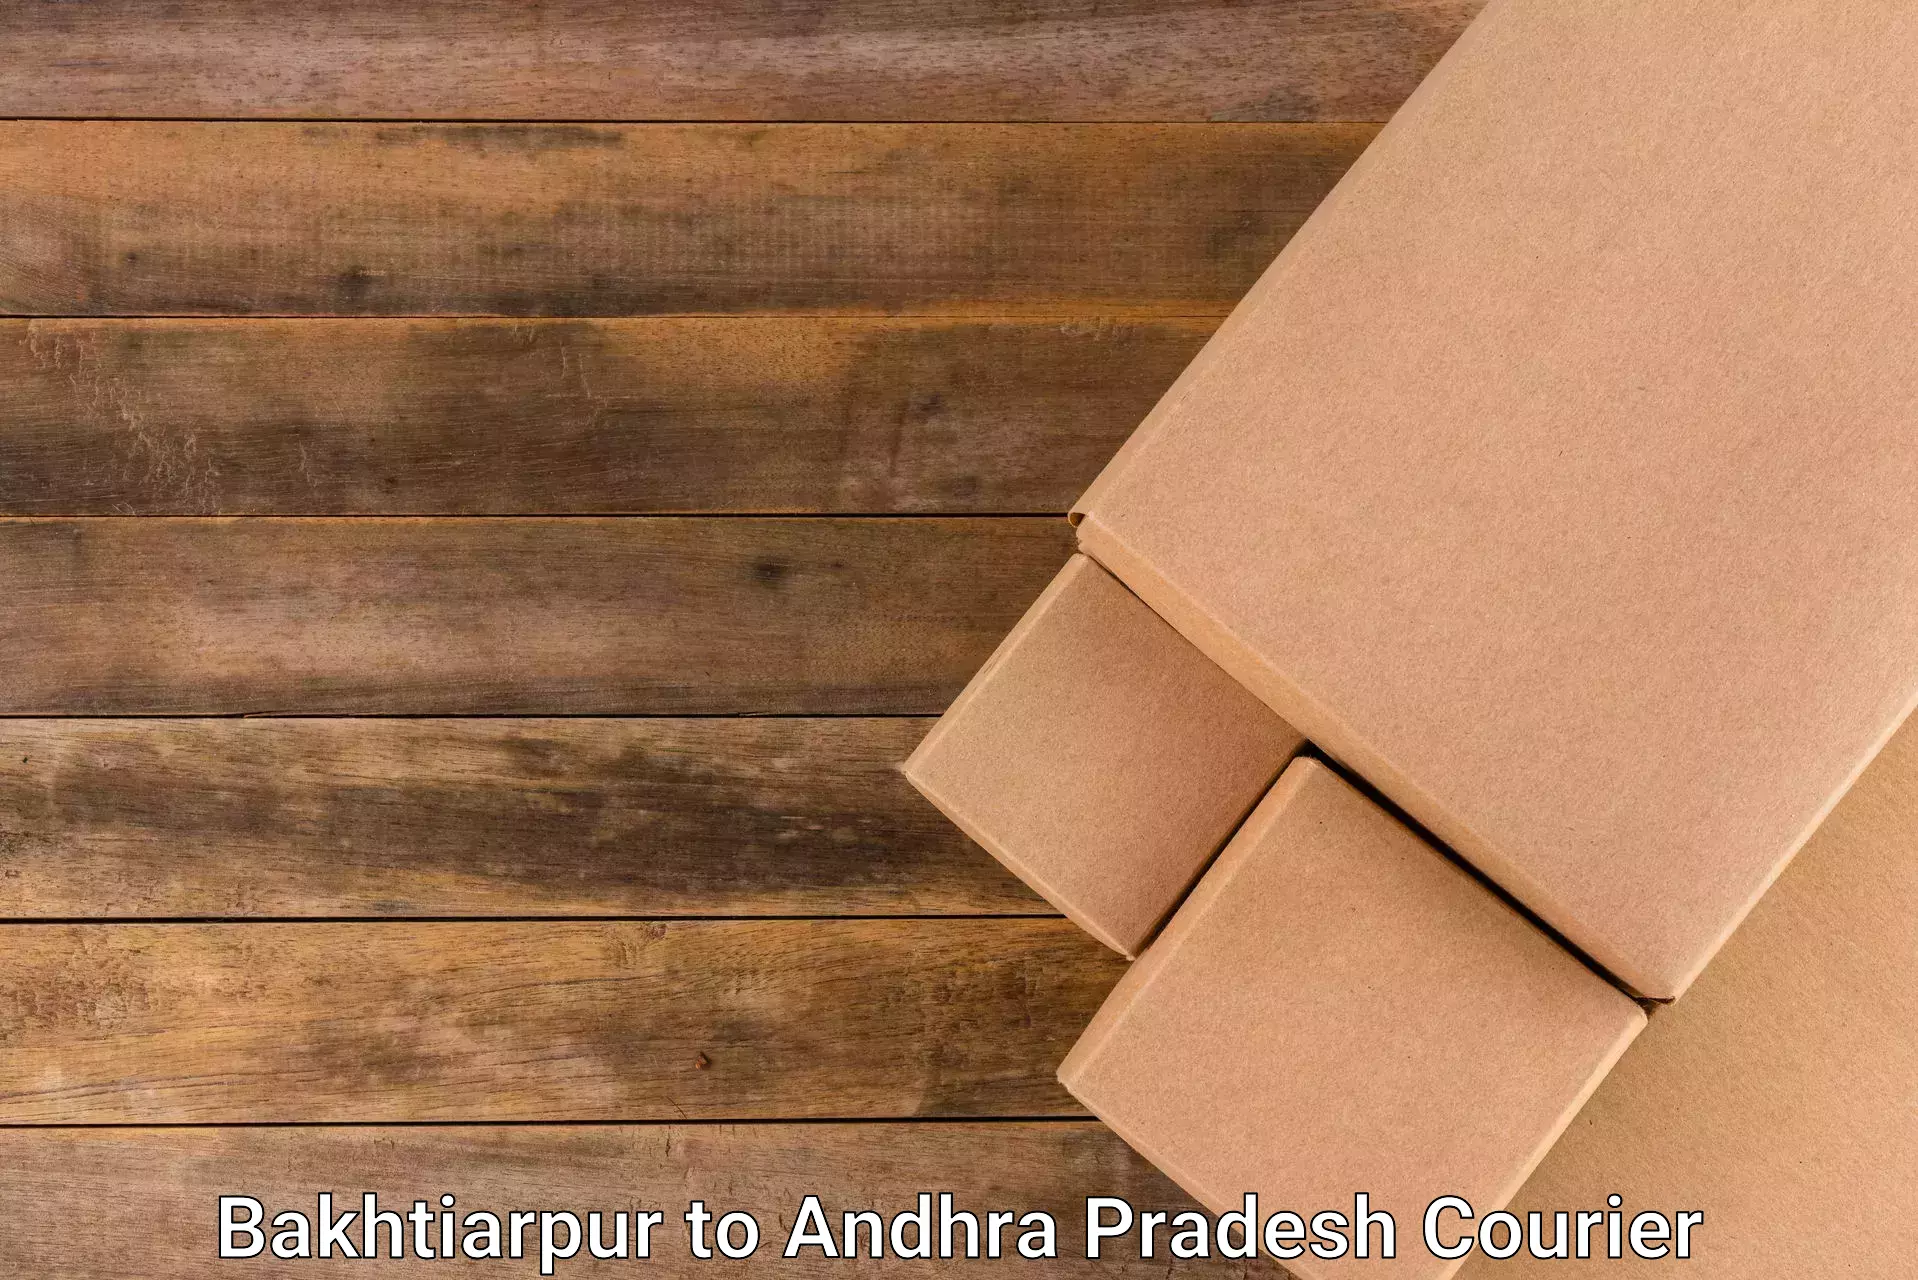 Global courier networks Bakhtiarpur to Andhra Pradesh